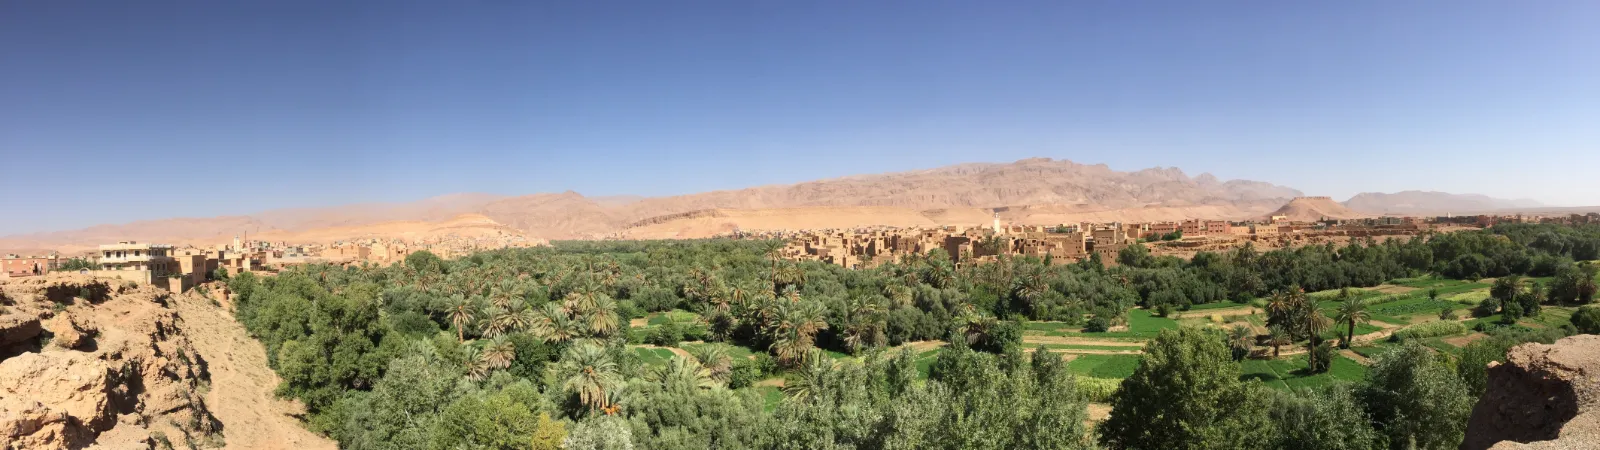 2 Days Atlas Valley Guided  Trek From Marrakech